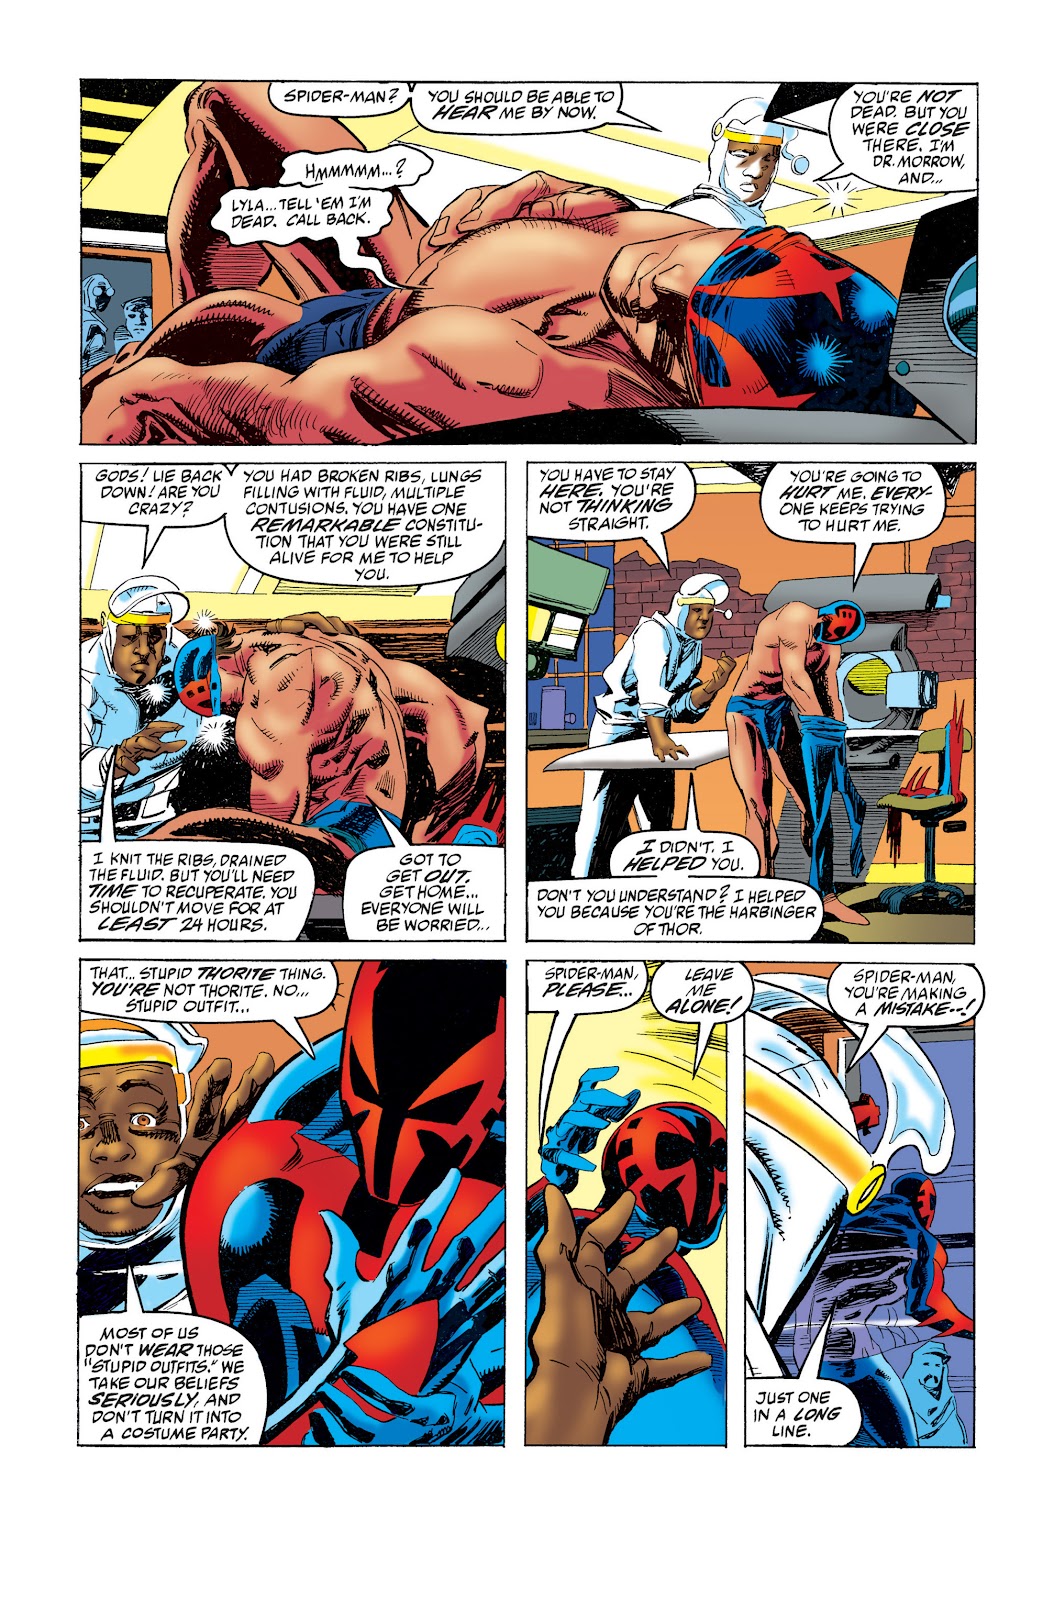 Spider-Man 2099 (1992) issue 6 - Page 19